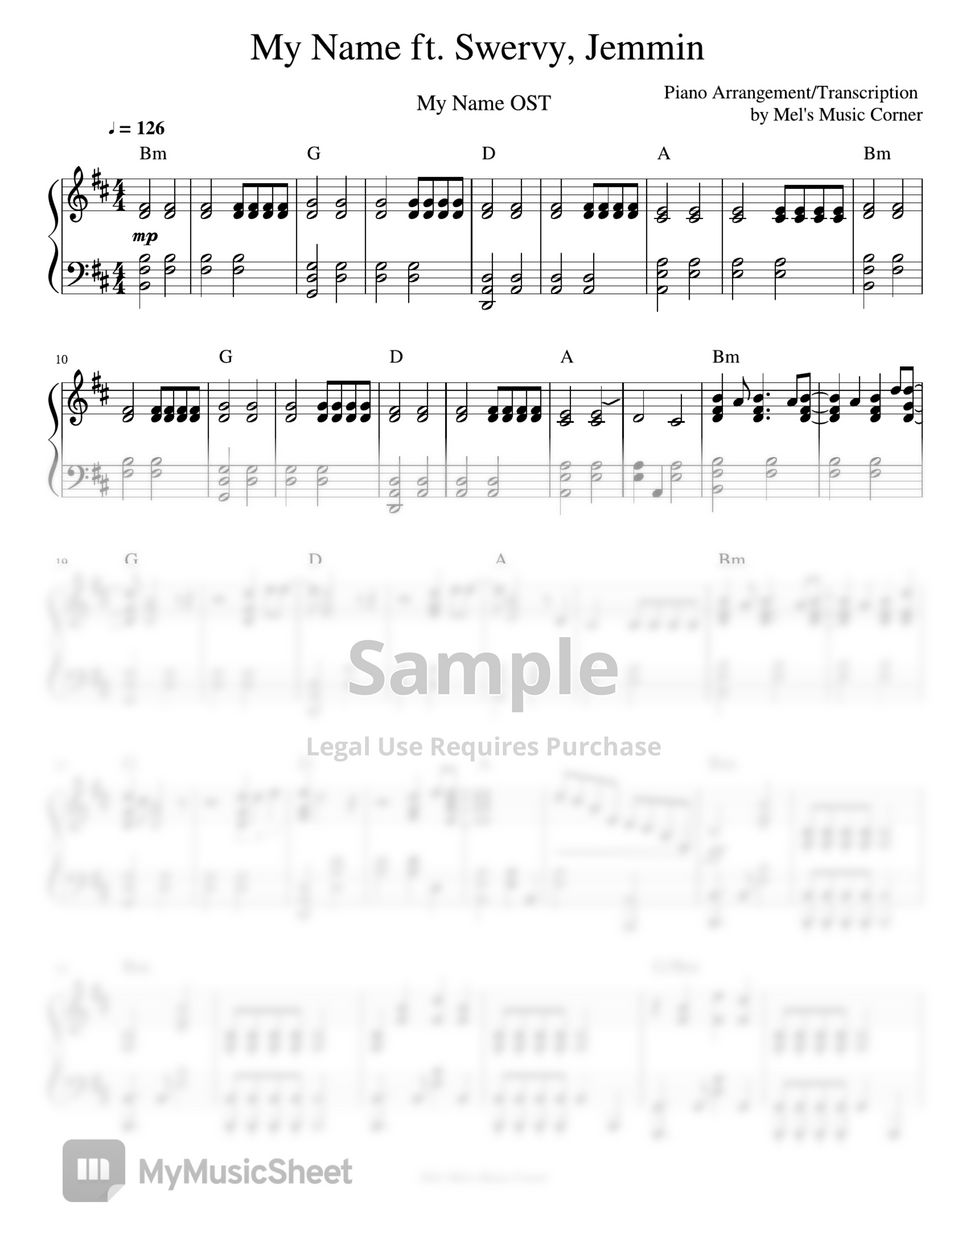 Jemmin feat. Swervy - My Name (piano sheet music) by Mel's Music Corner